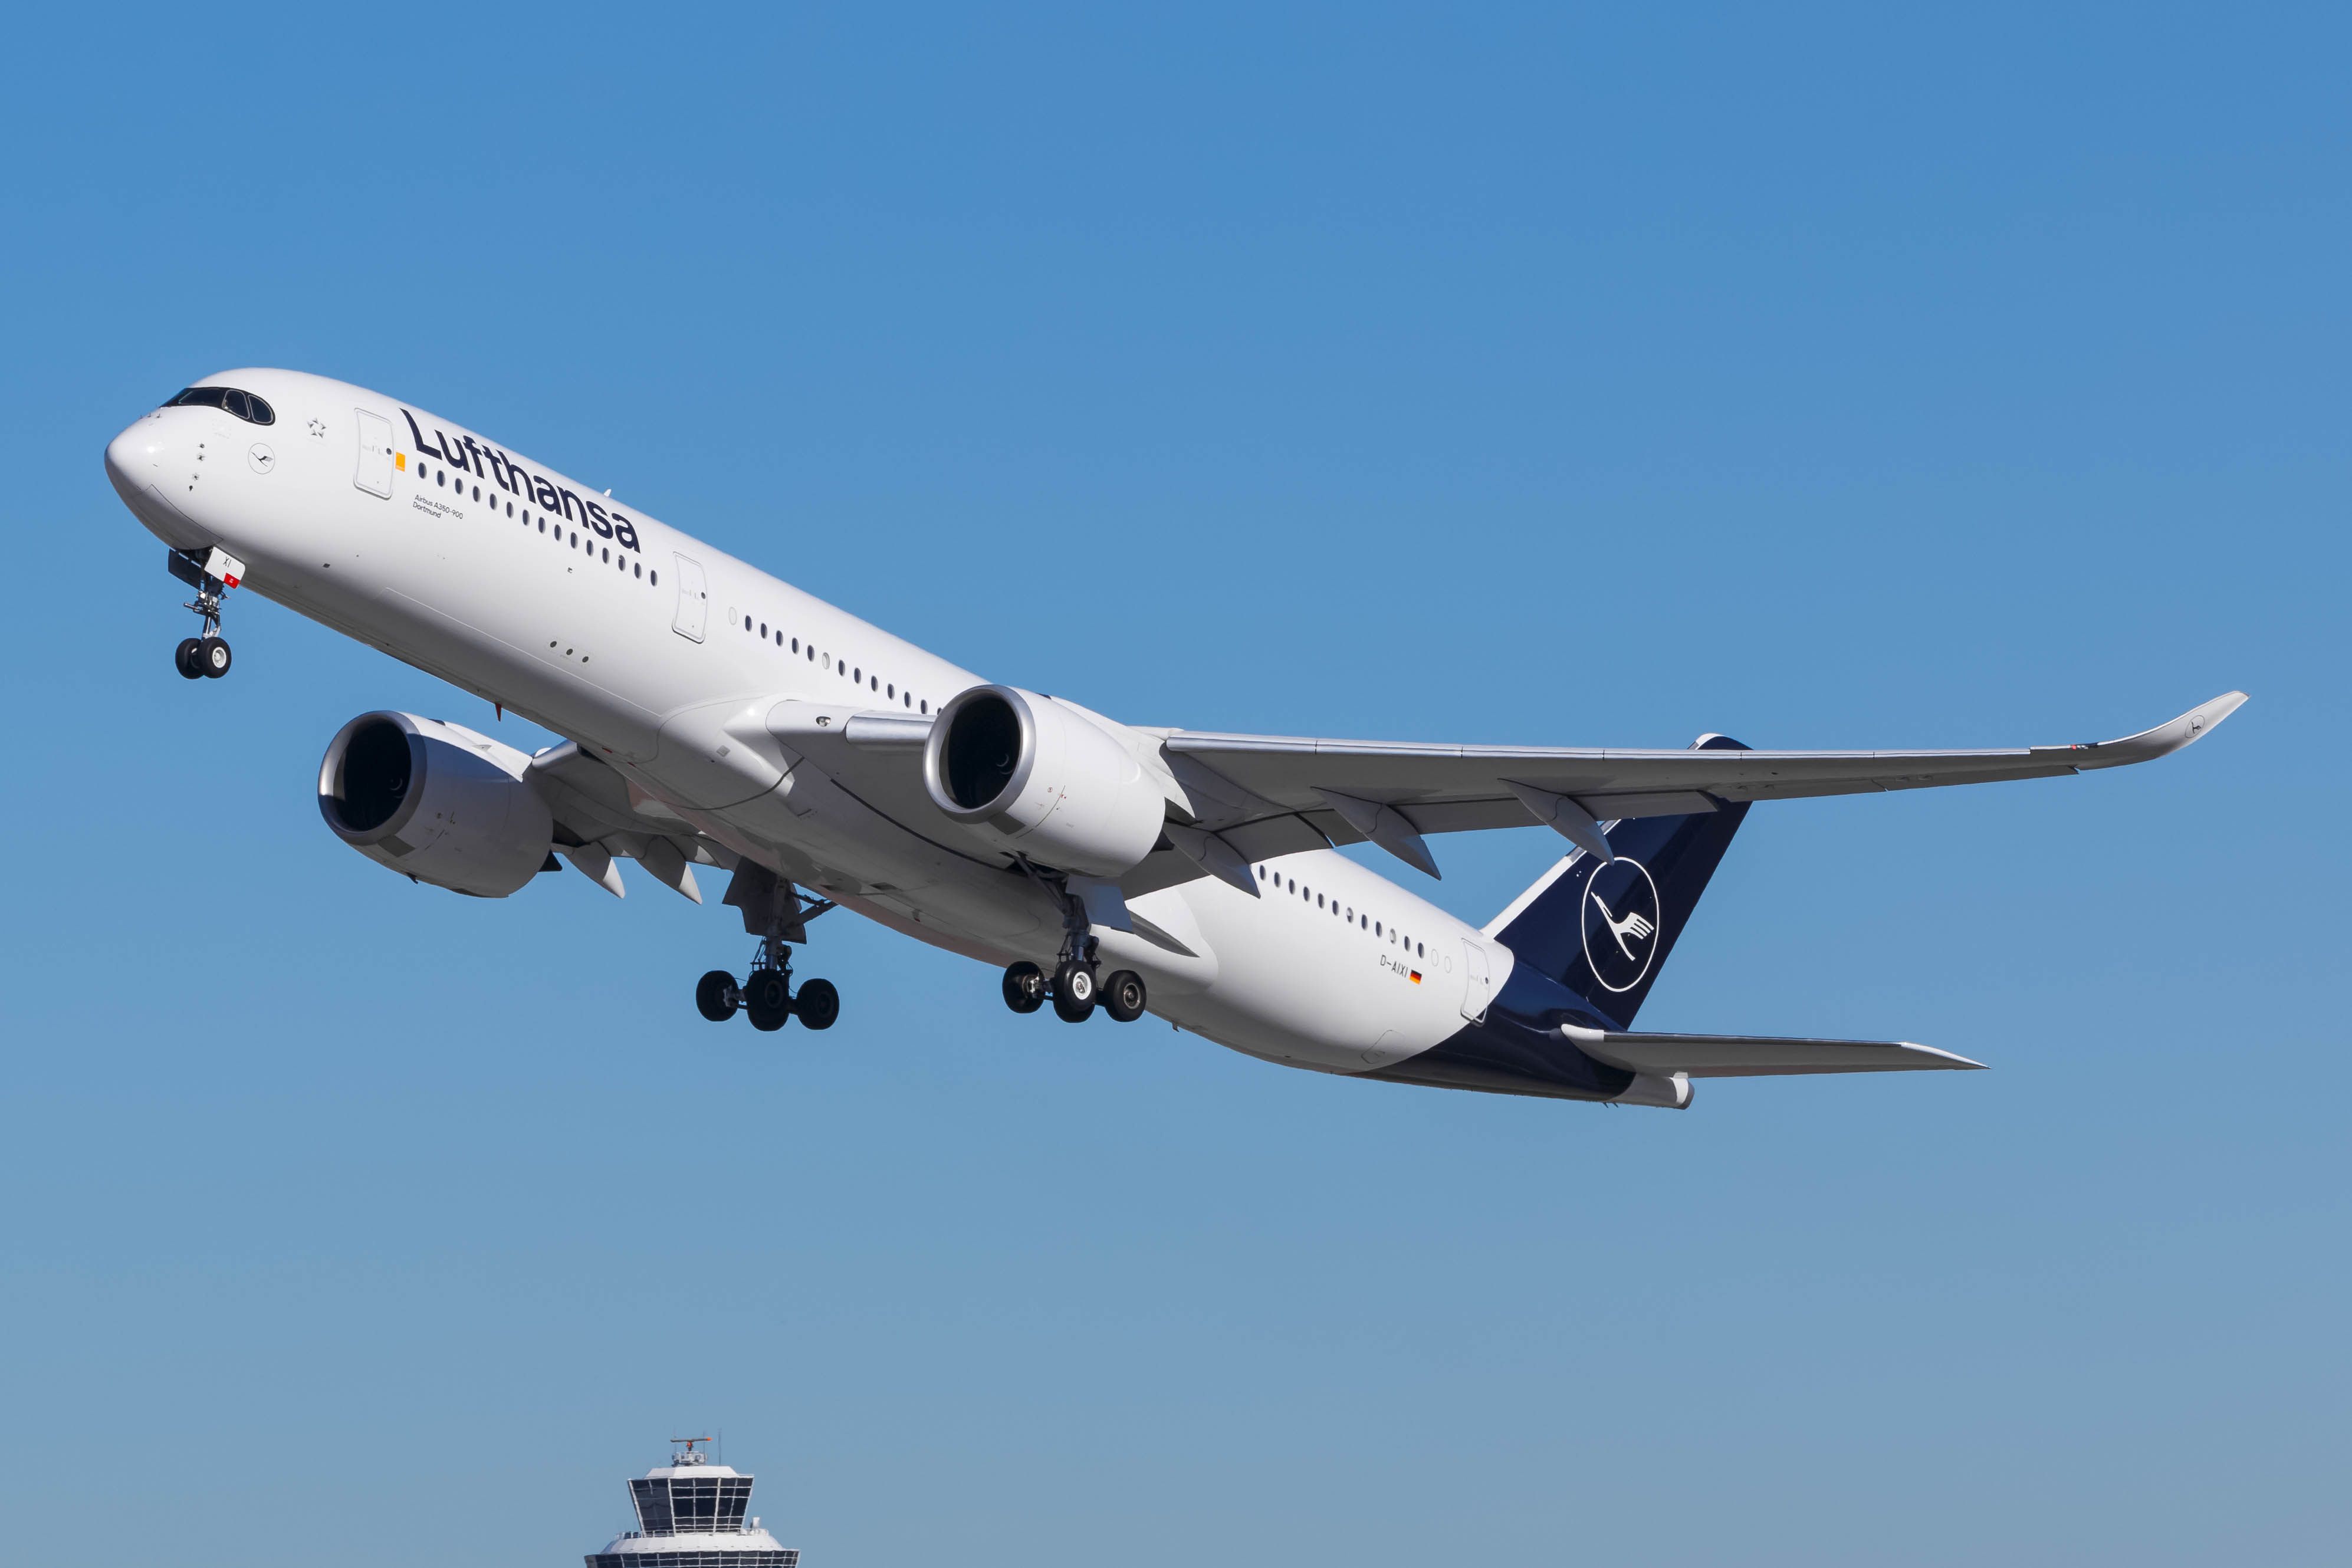 Lufthansa Airbus A350-900 departing Munich Airport MUC